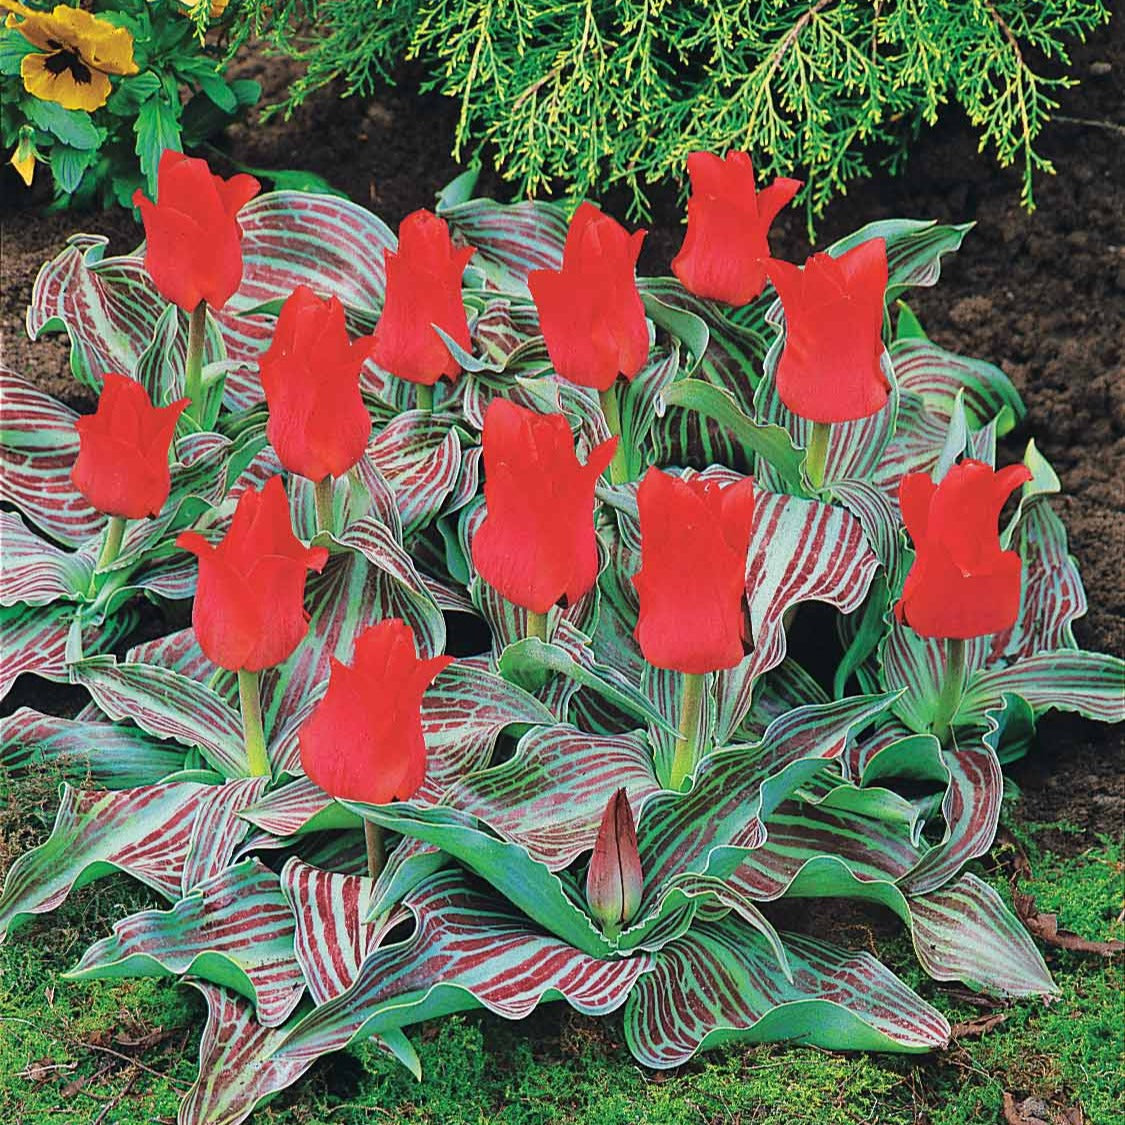 10 Tulipes Chaperon Rouge - Tulipa greigii chaperon rouge - Bulbes à fleurs